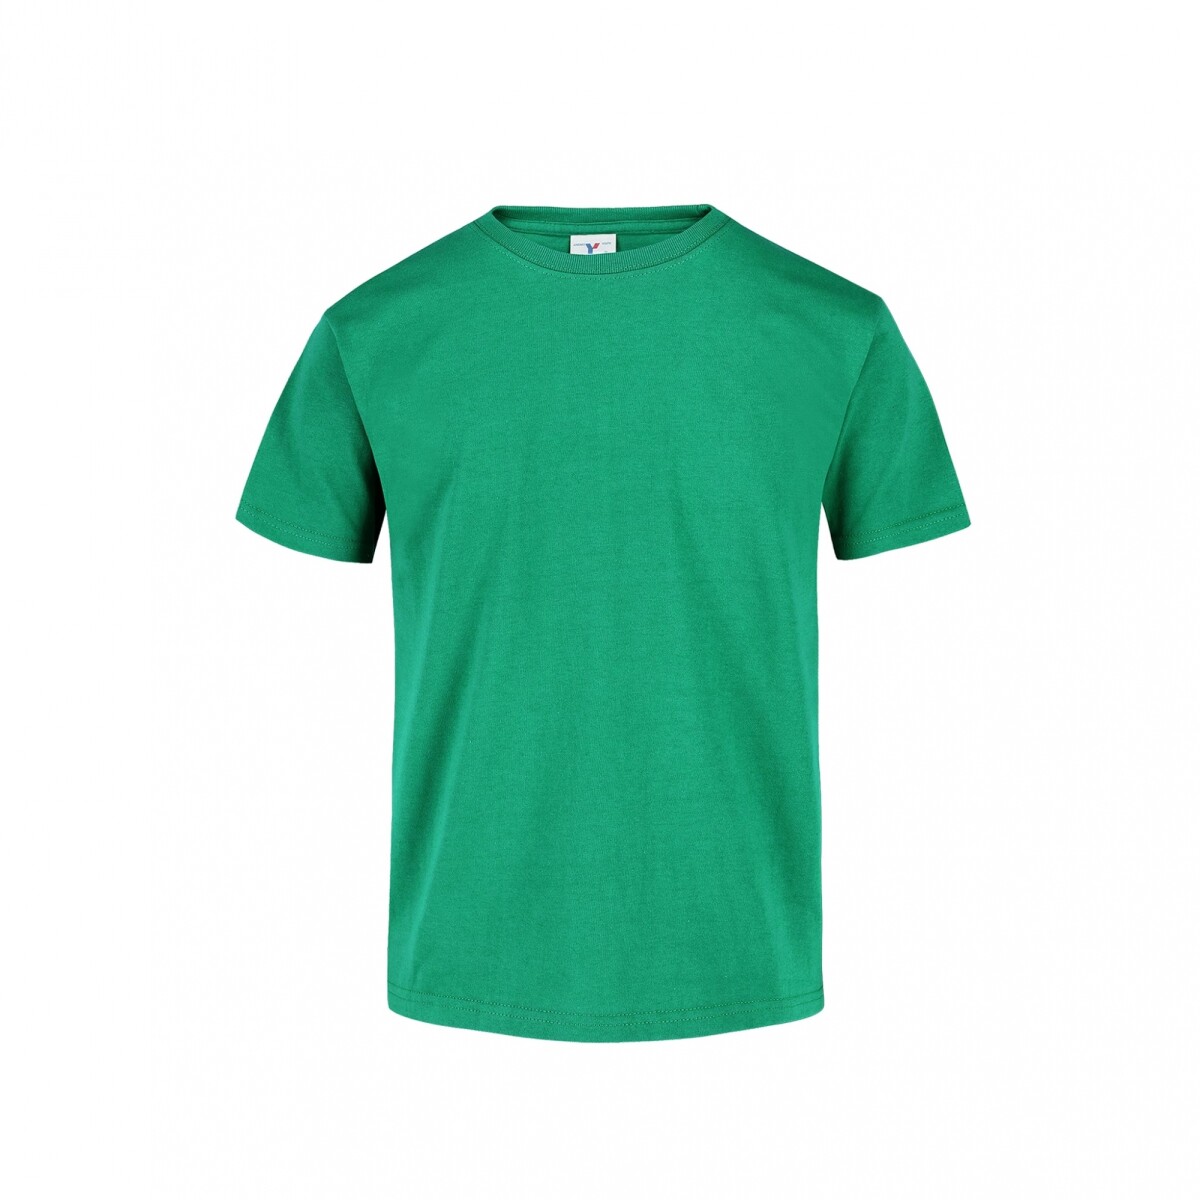 Camiseta a la base niño - Verde jade 